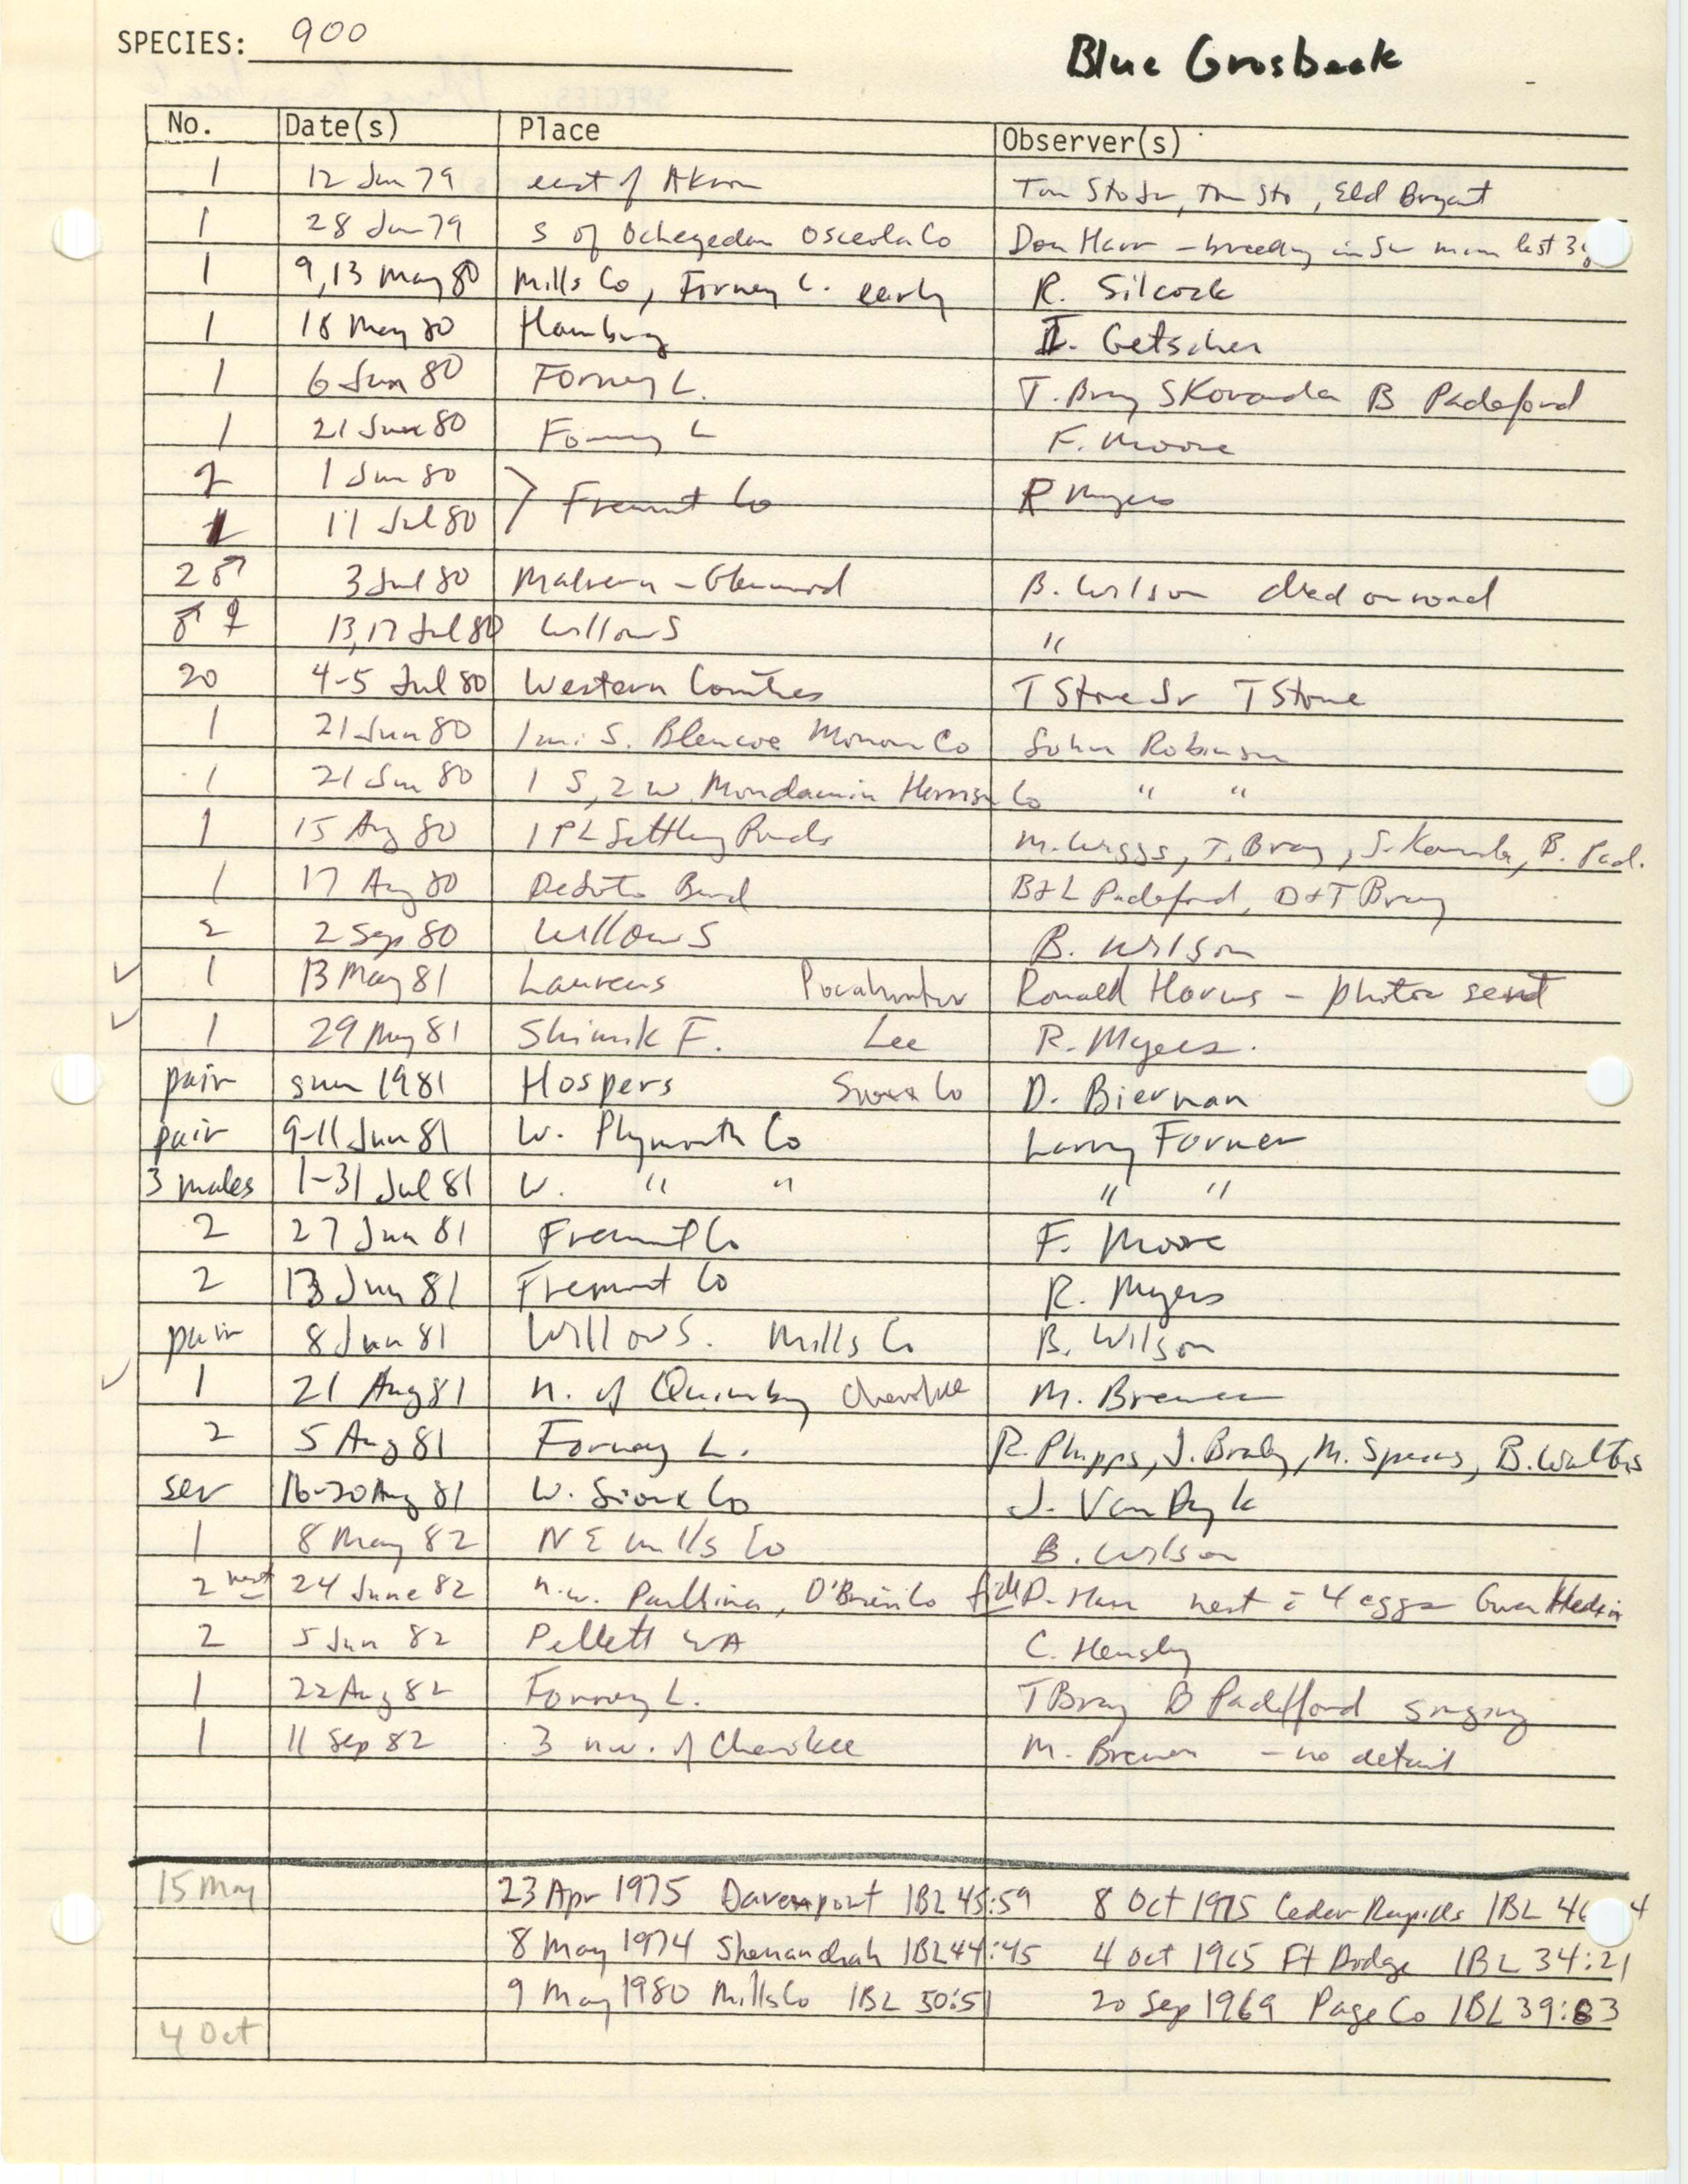 Iowa Ornithologists' Union, field report compiled data, Blue Grosbeak, 1965-1982